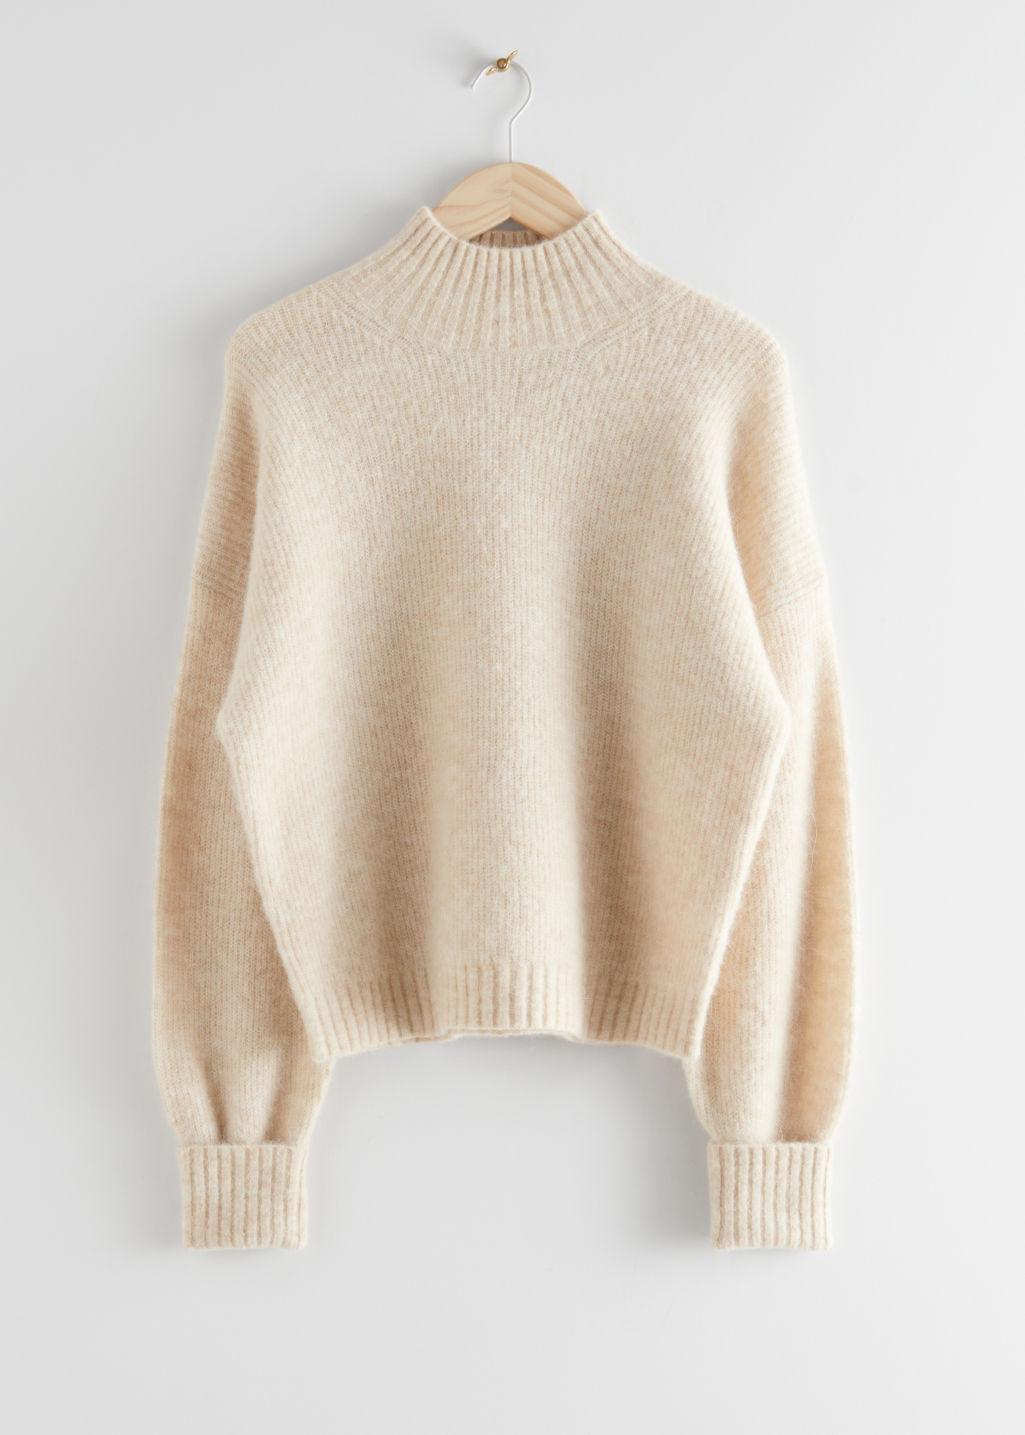 & Other Stories Wool Alpaca Blend Turtleneck Knit Sweater in Beige  (Natural) - Lyst